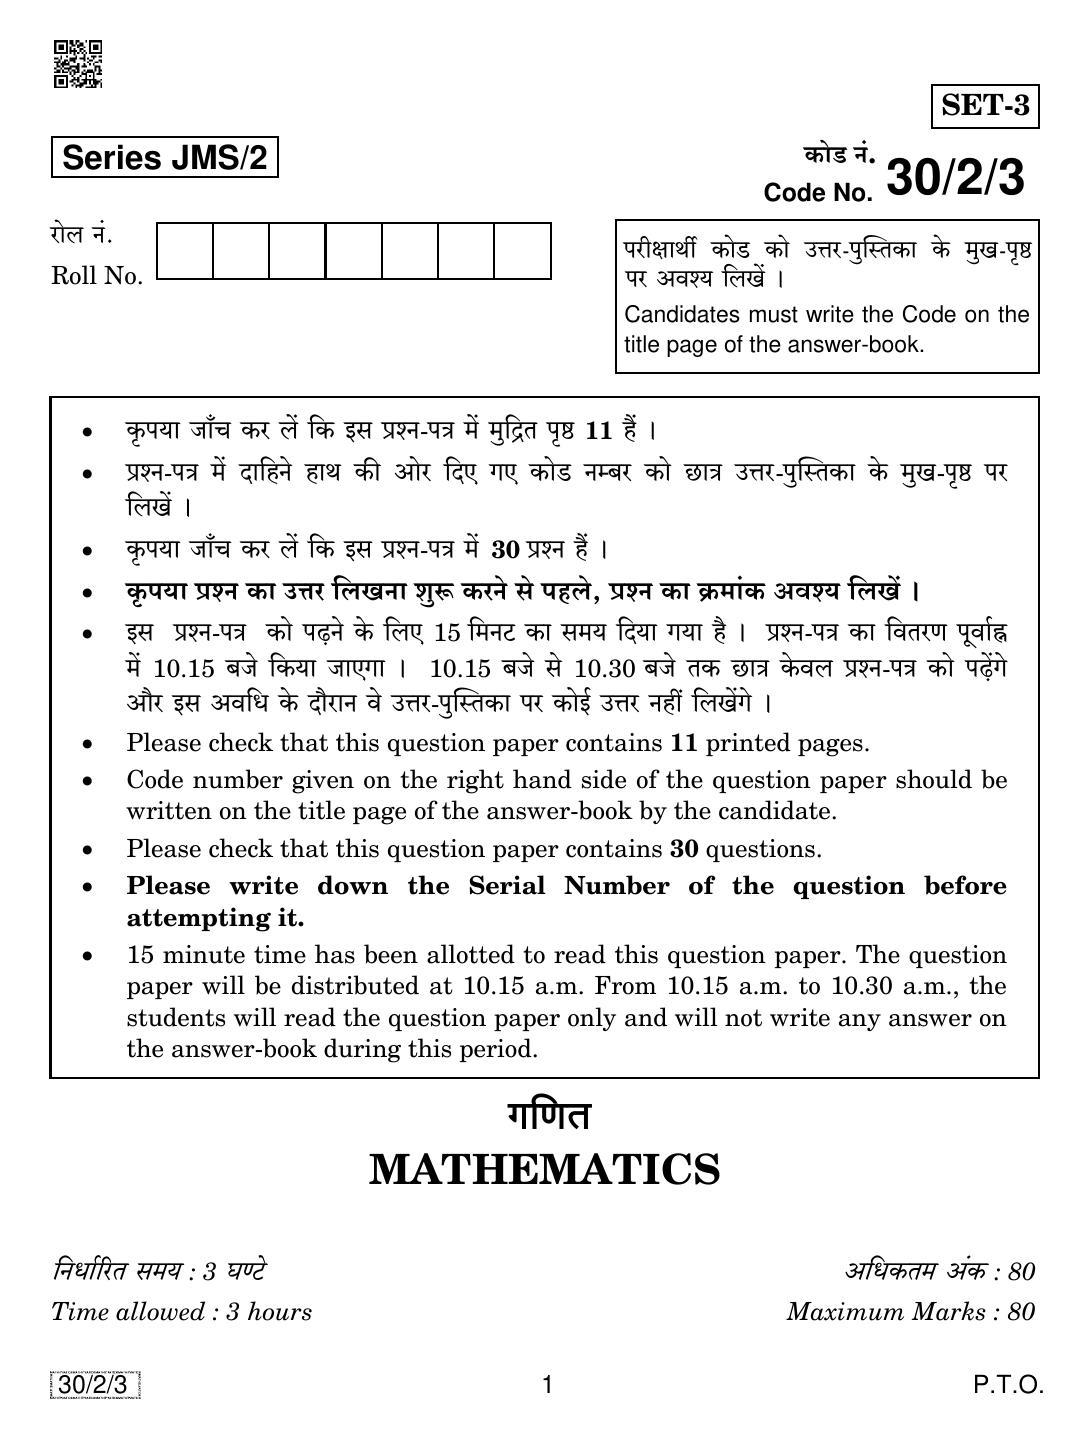 CBSE Class 10 Maths (30/2/3 - SET 3) 2019 Question Paper - Page 1